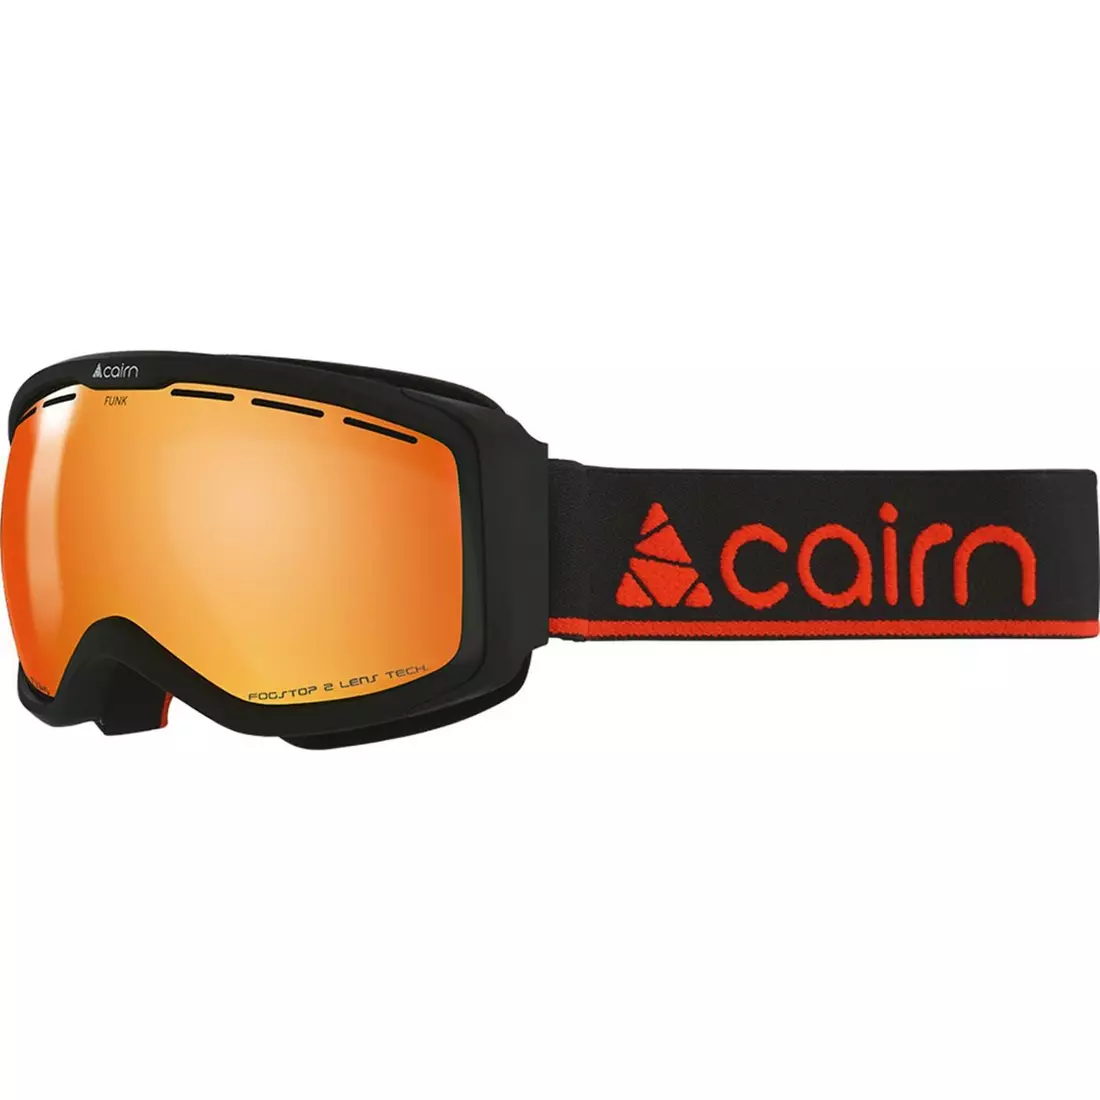 CAIRN juniorské lyžiarske/snowboardové okuliare FUNK OTG SPX3000 IUM Mat Black Orange 